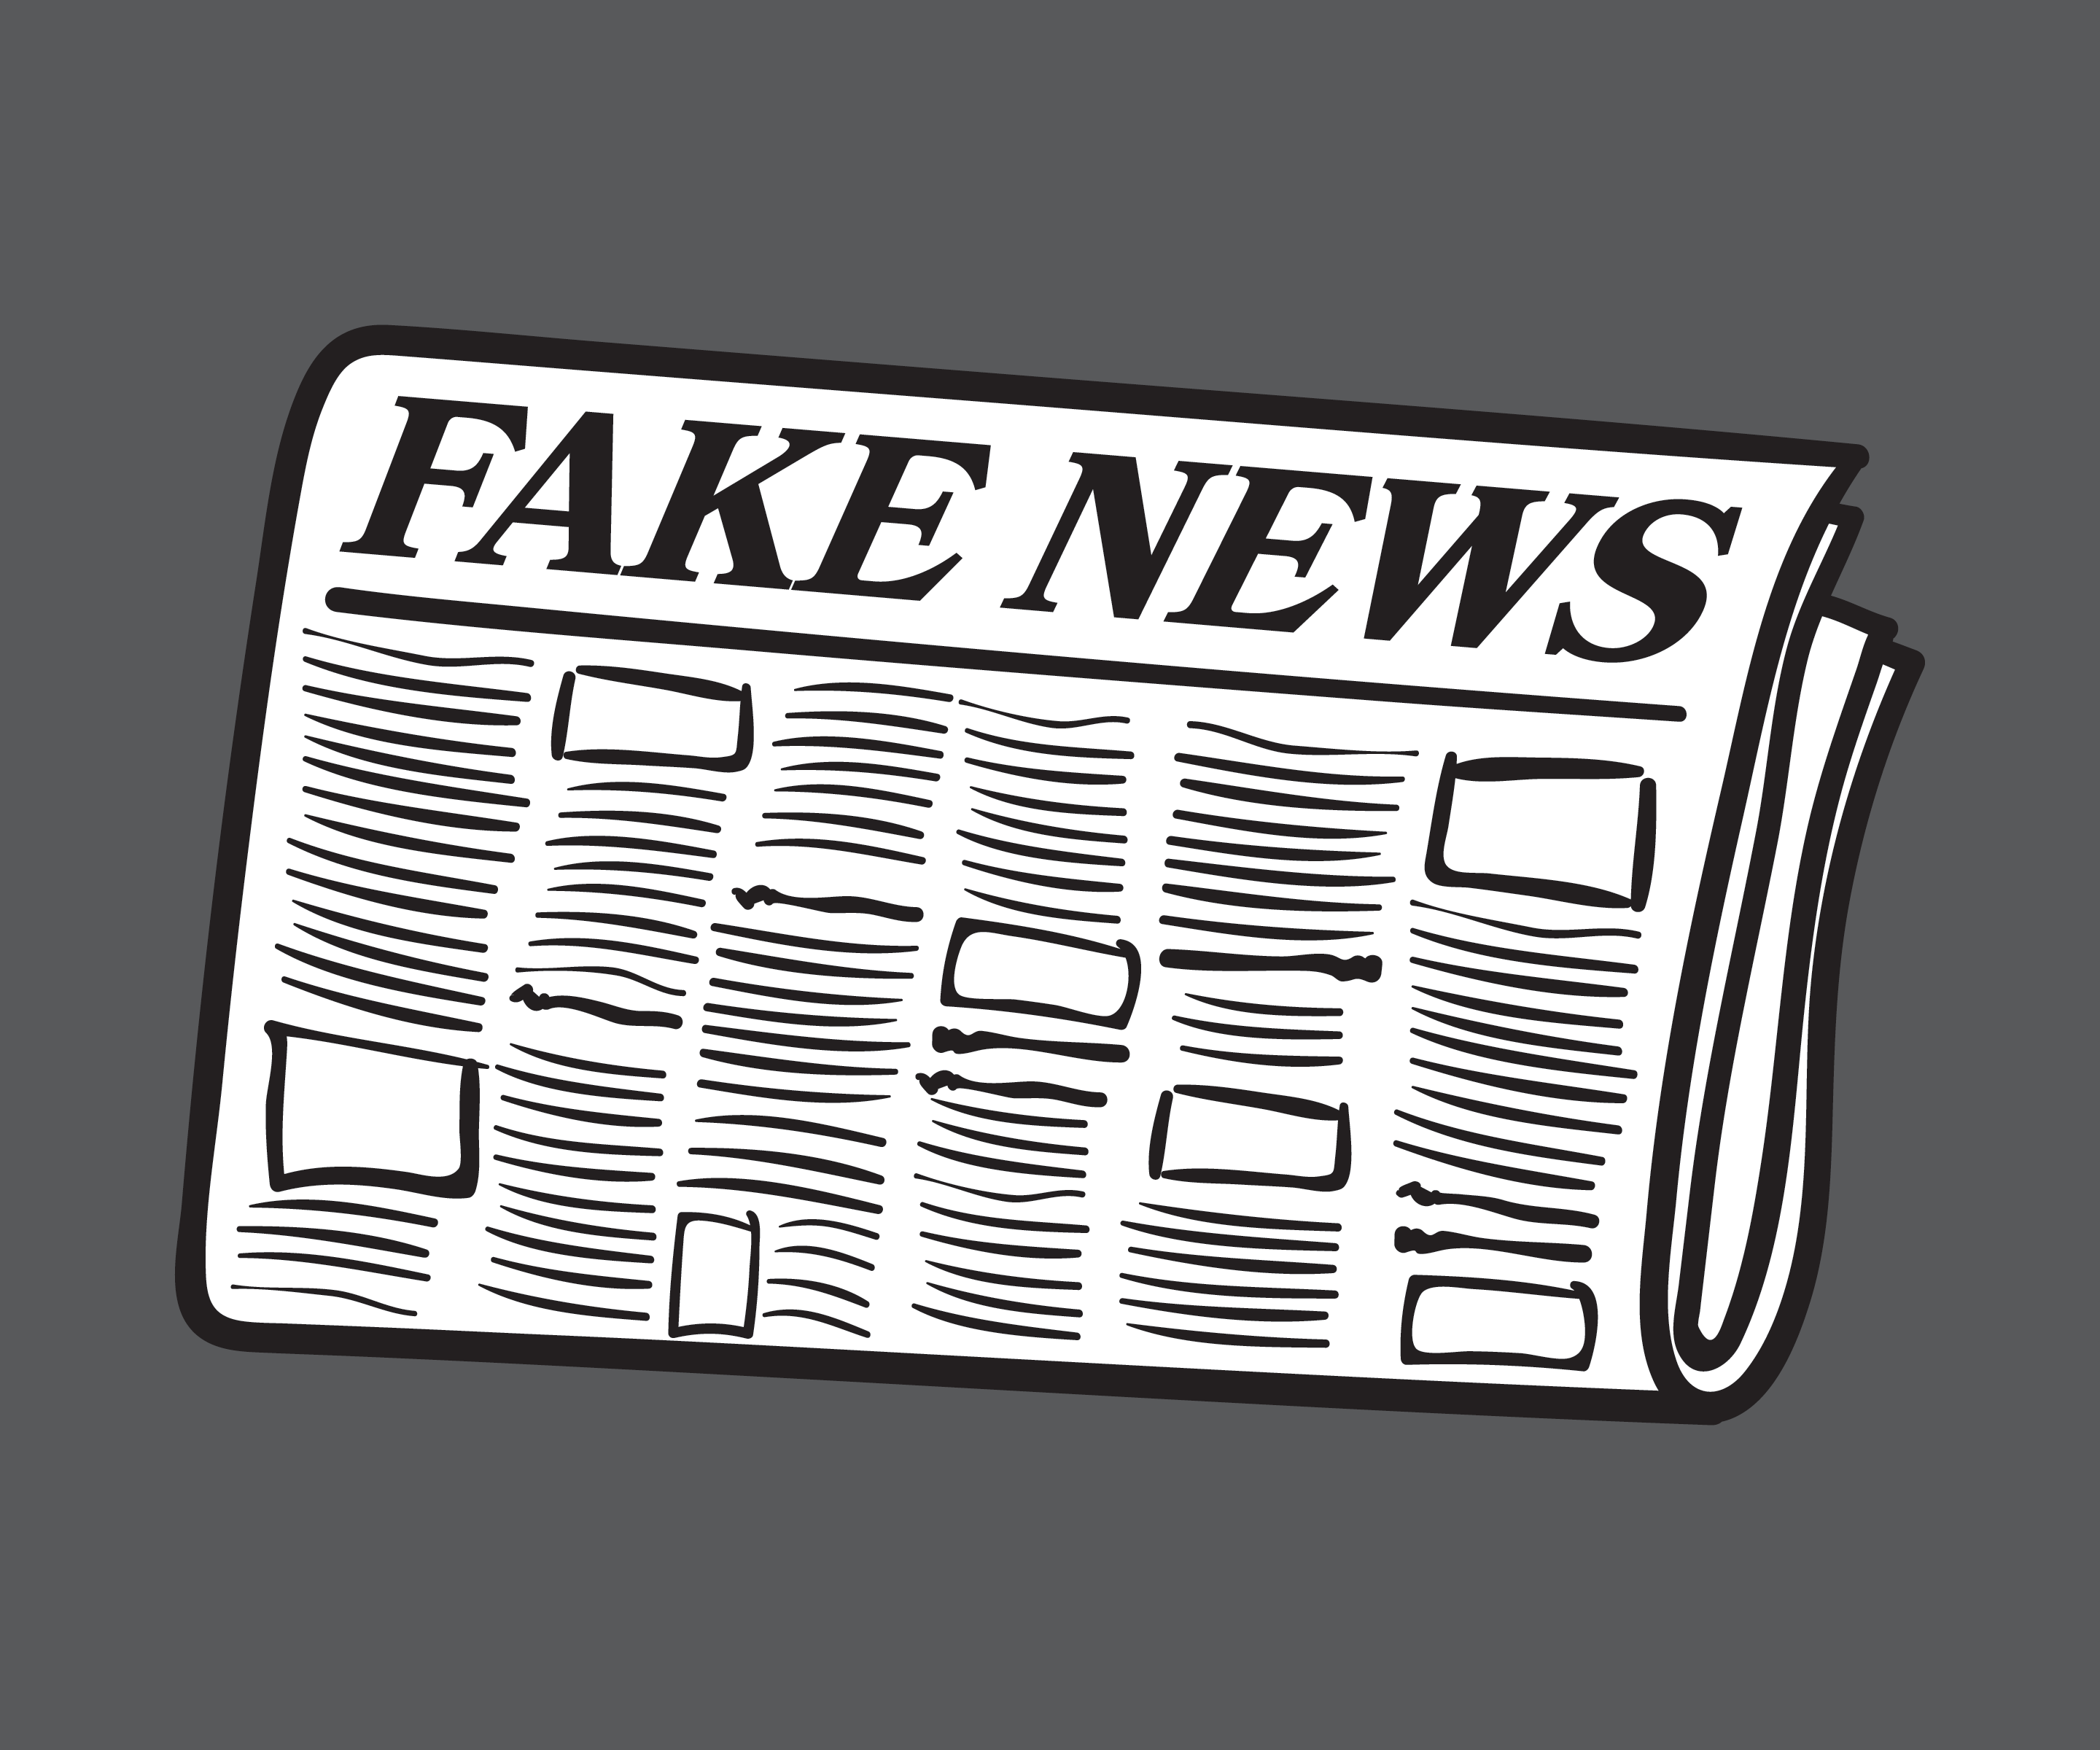 Understanding Fake News